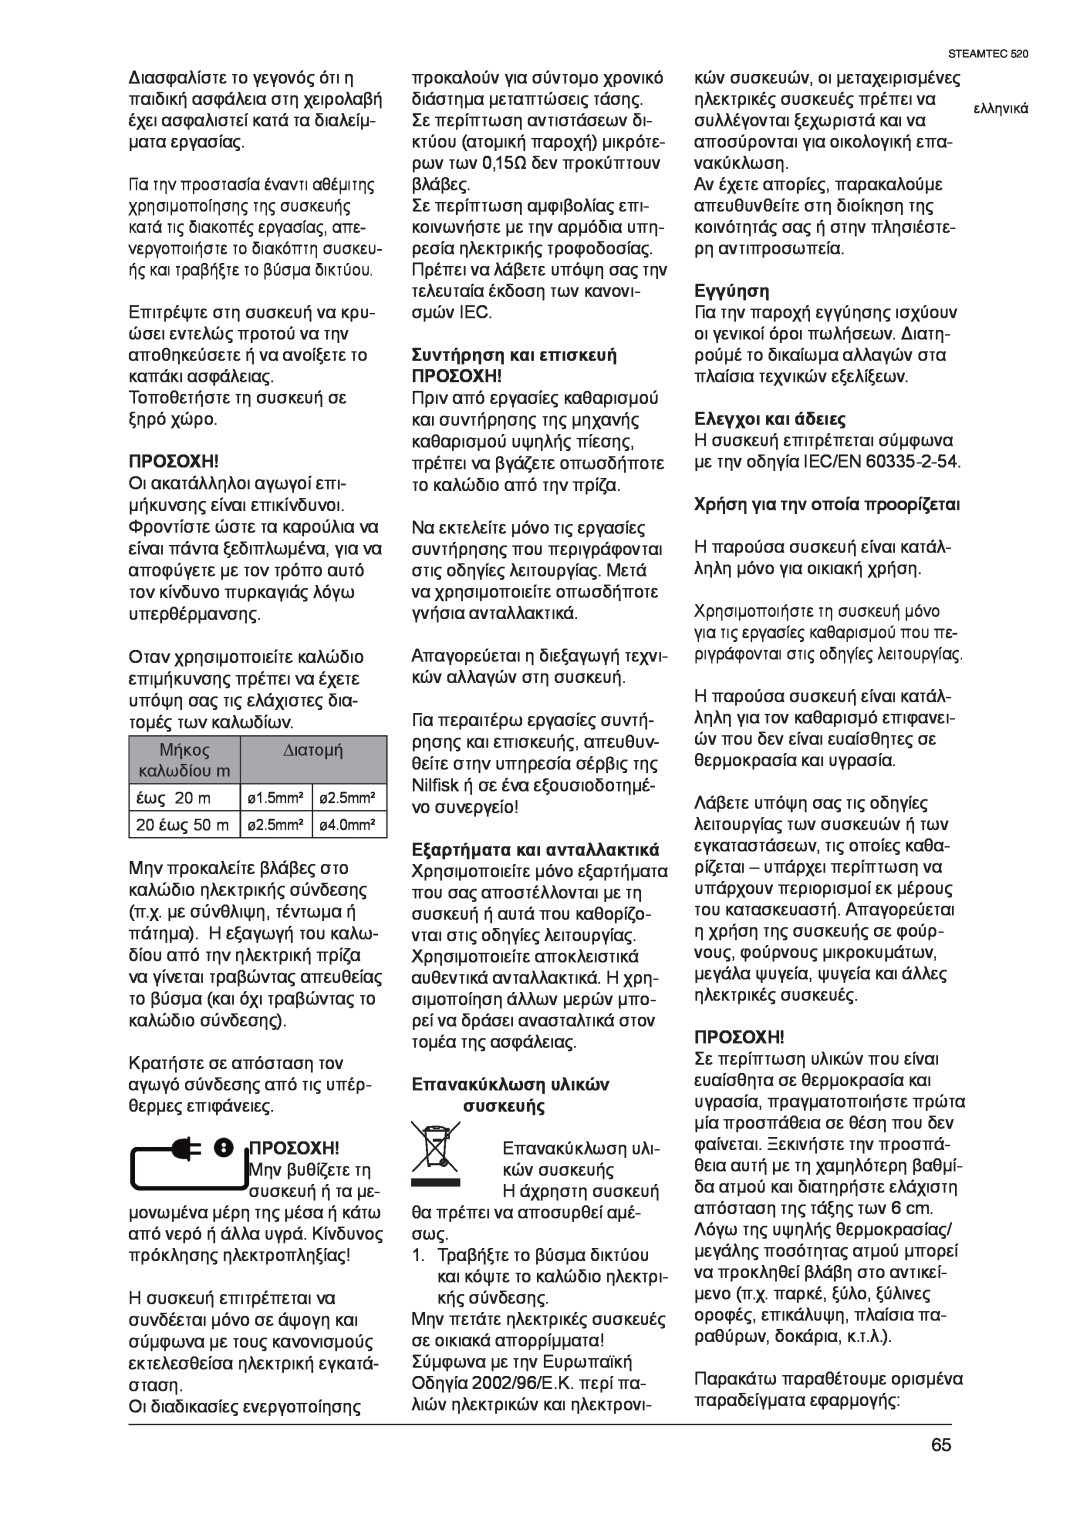 Nilfisk-ALTO 520 manual Προσοχη, Συντήρηση και επισκευή ΠΡΟΣΟΧΗ, Εξαρτήματα και ανταλλακτικά, Επανακύκλωση υλικών συσκευής 